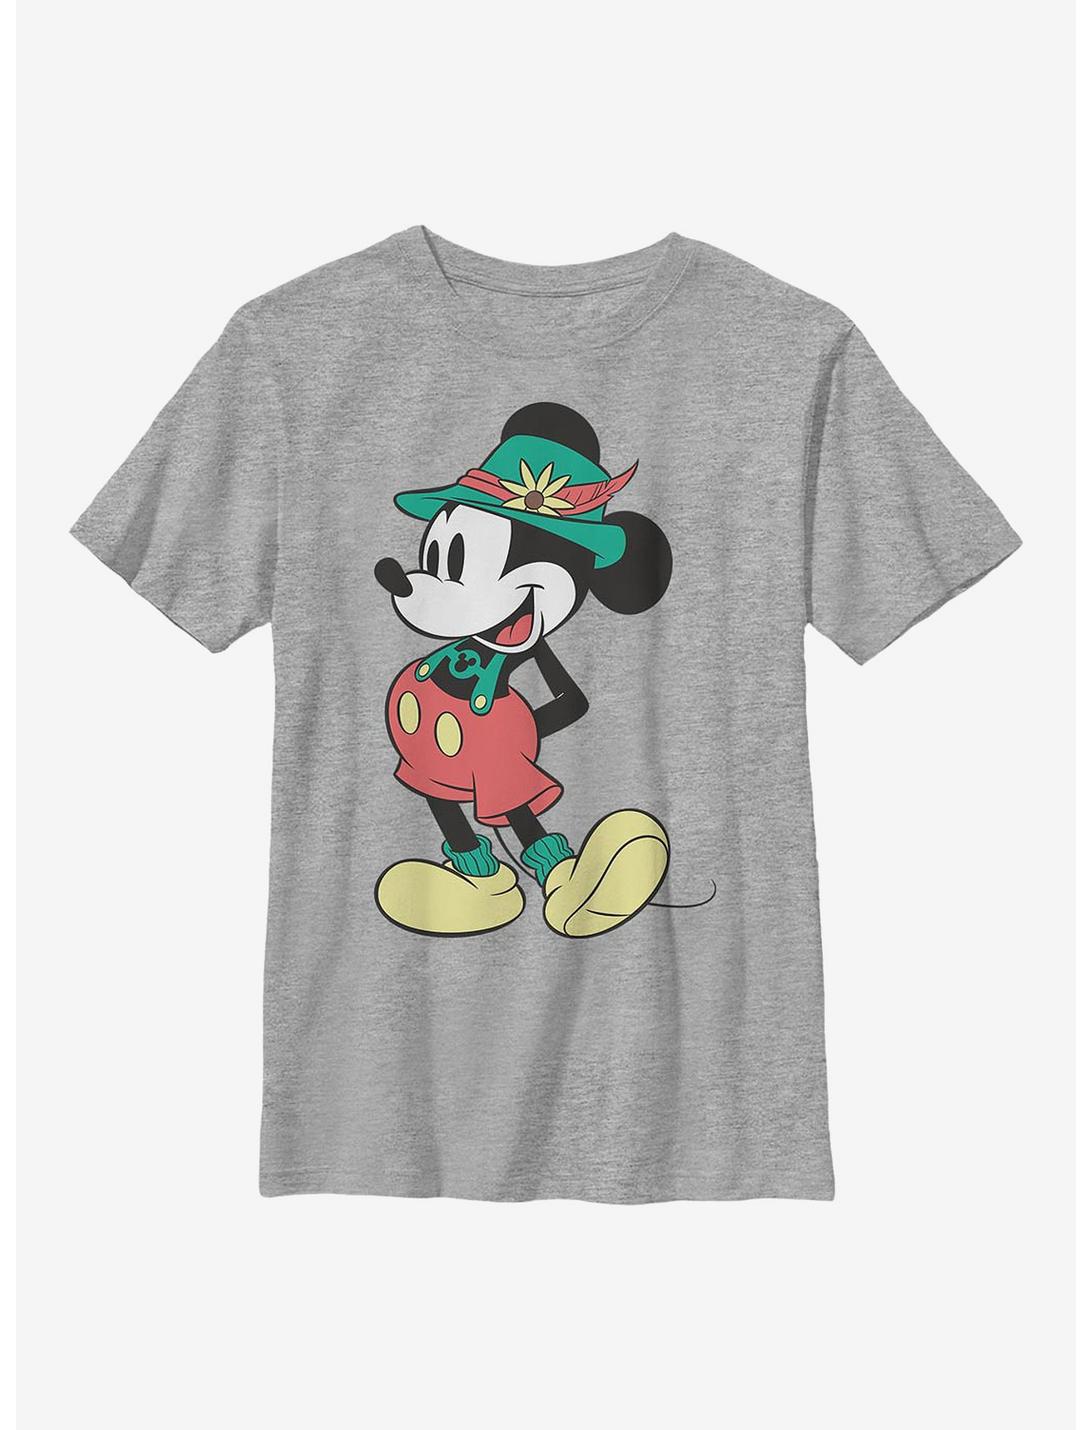 Disney Mickey Mouse Lederhosen Basics Youth T-Shirt, ATH HTR, hi-res